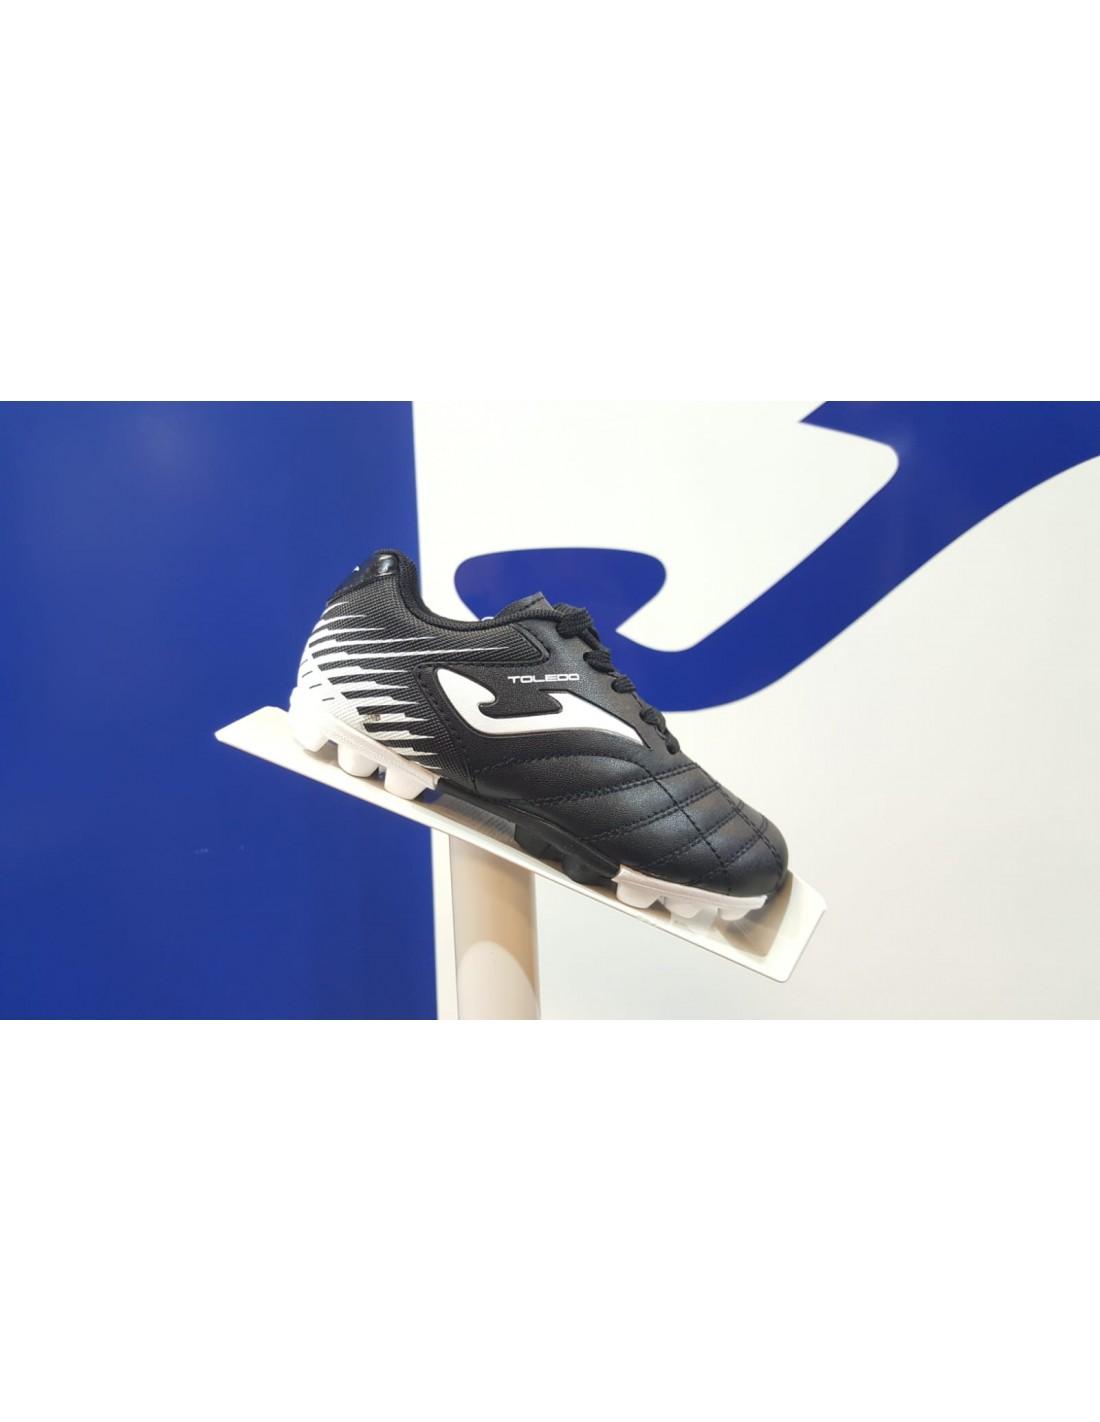 Zapatos Fútbol Unisex Joma Toledo Jr FG Azul